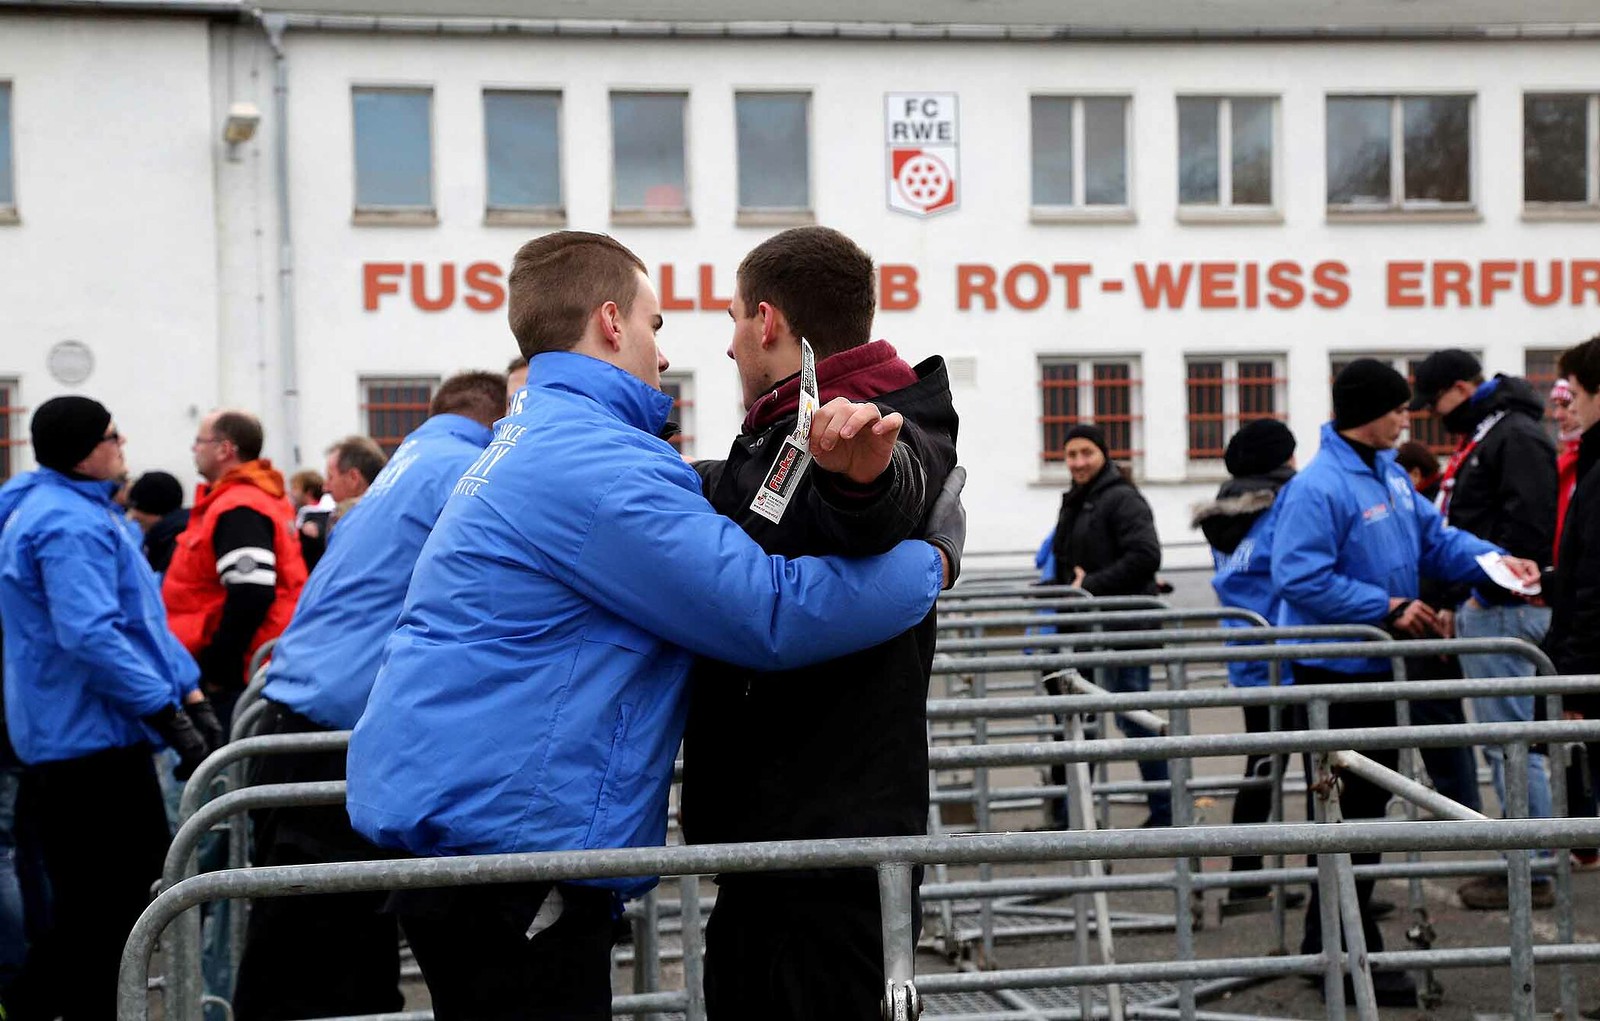 21.11.2015  FC Rot-Weiss Erfurt vs. F.C. Hansa Rostock 3-2 , Foto: Frank Steinhorst-www.clickandburn.de